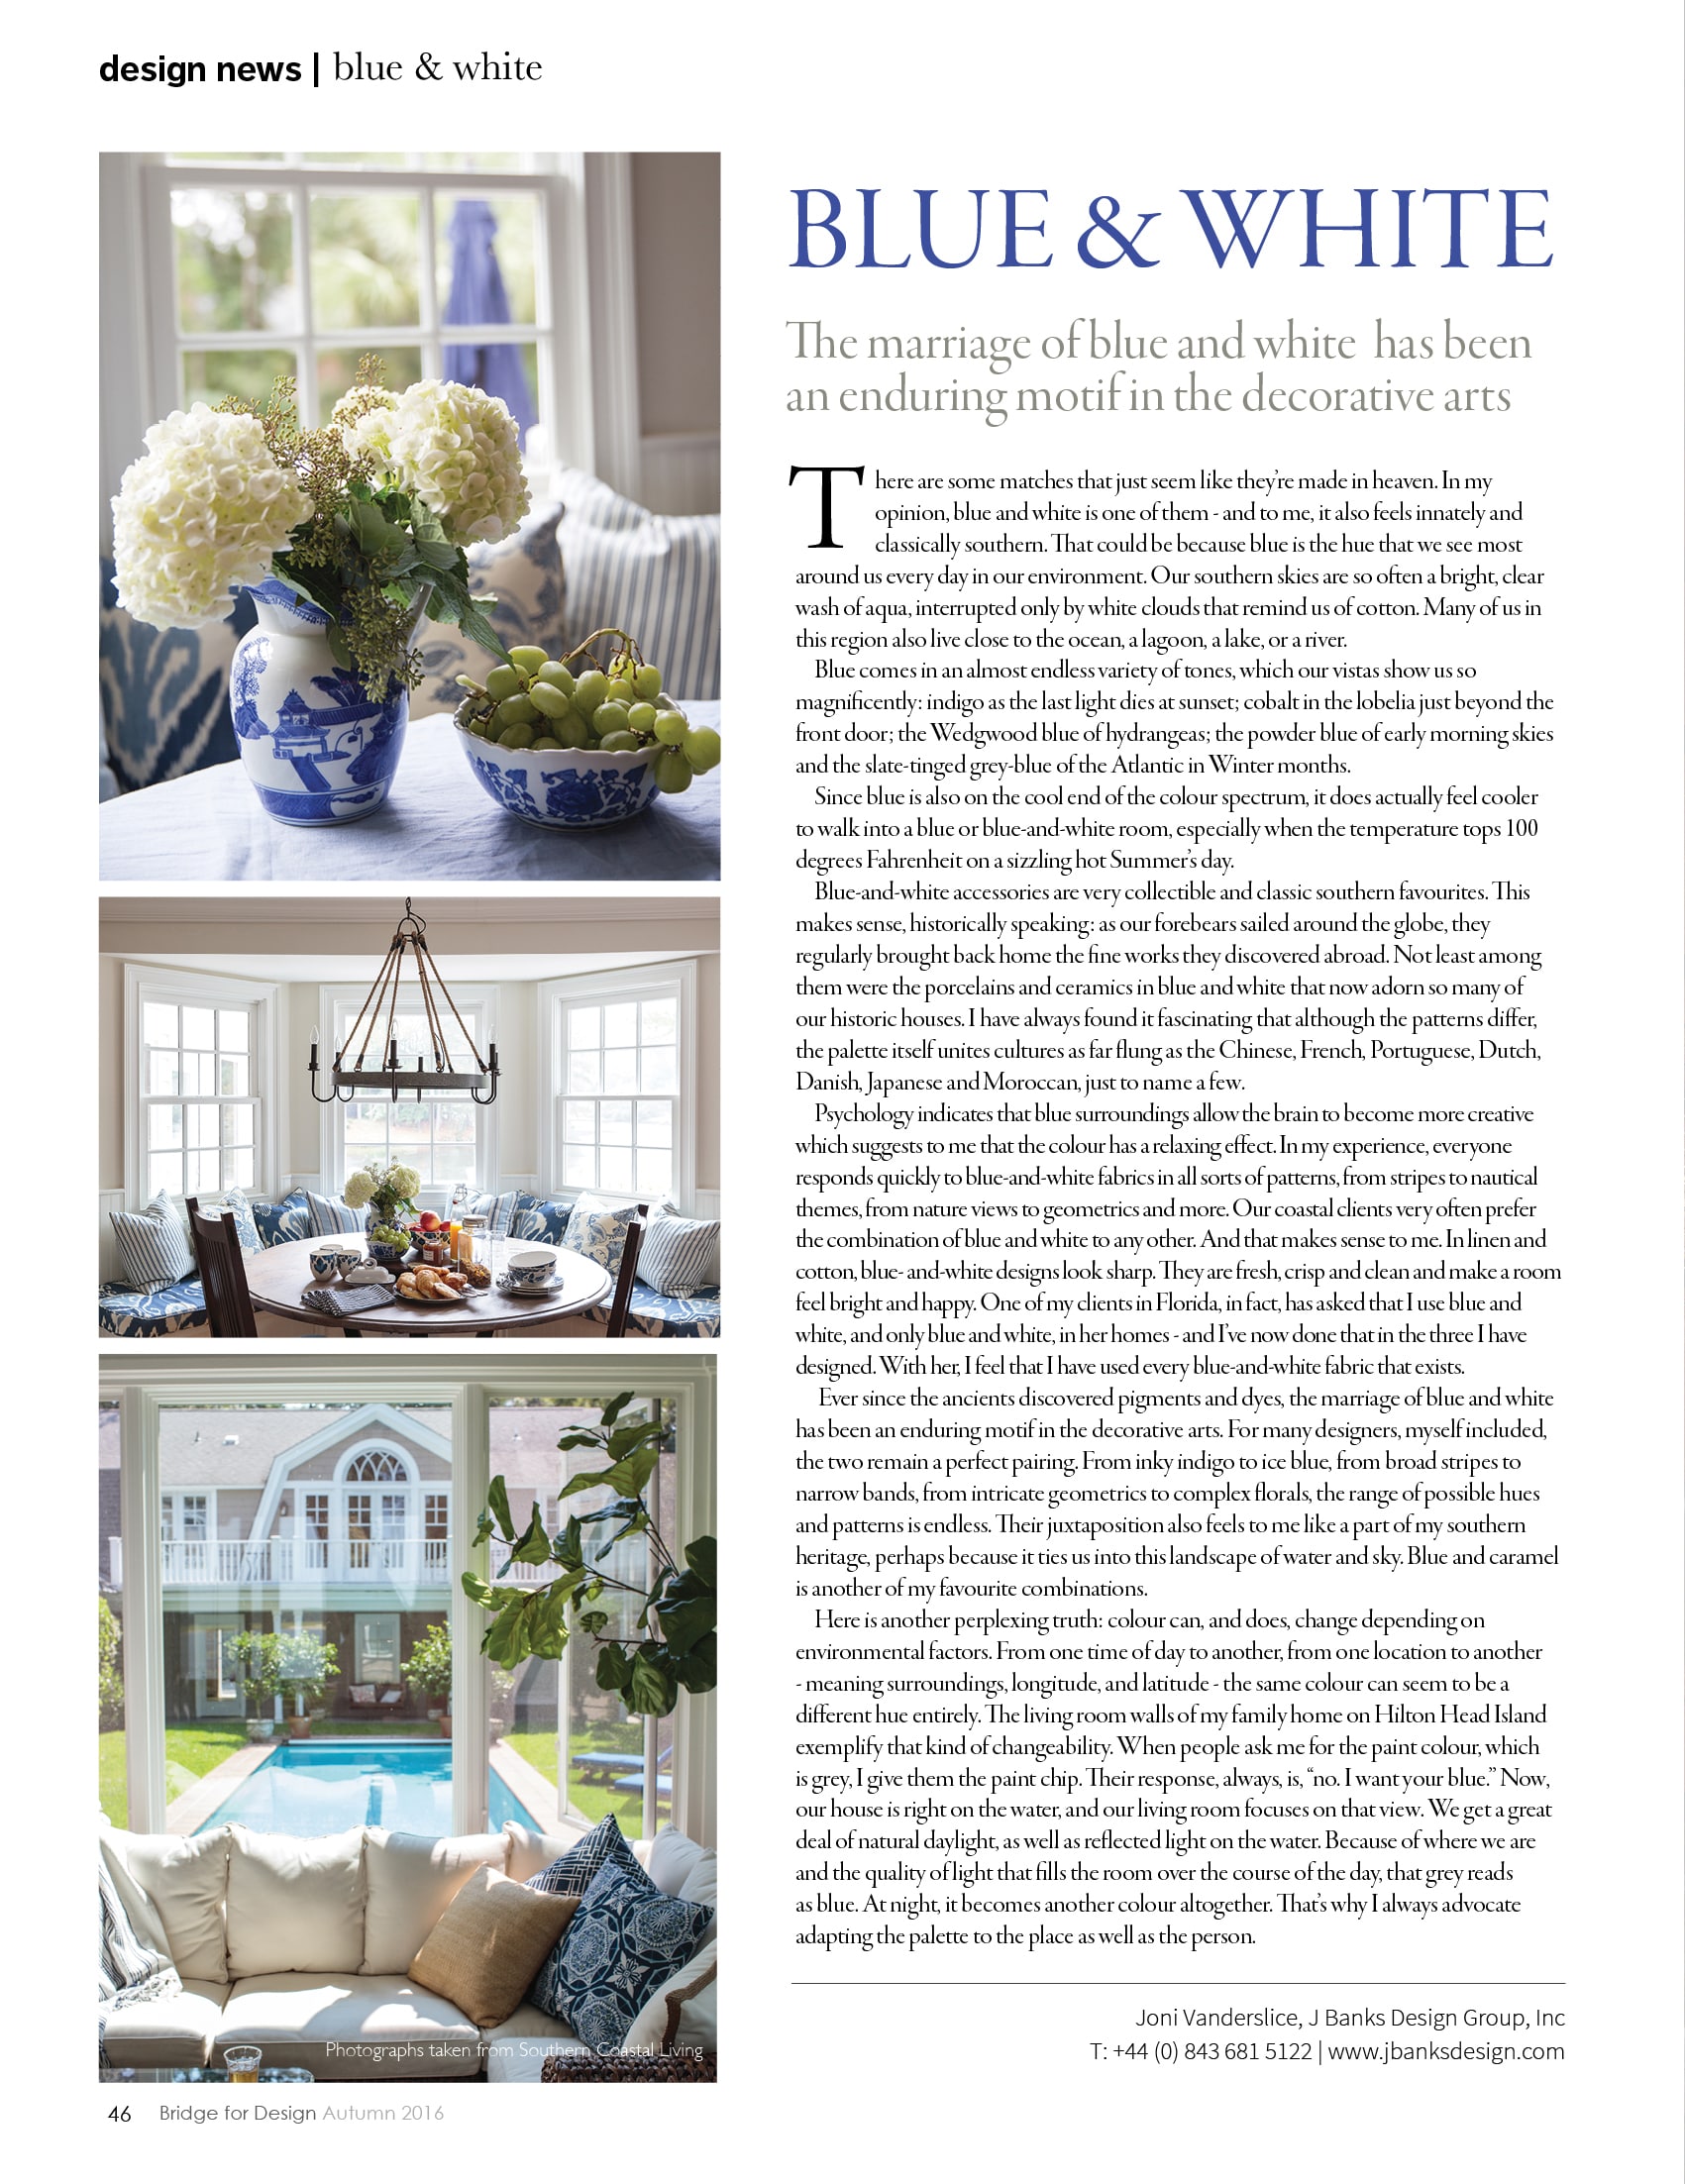 joni vanderslice shares blue and white decorating advice in bridge for design magazine